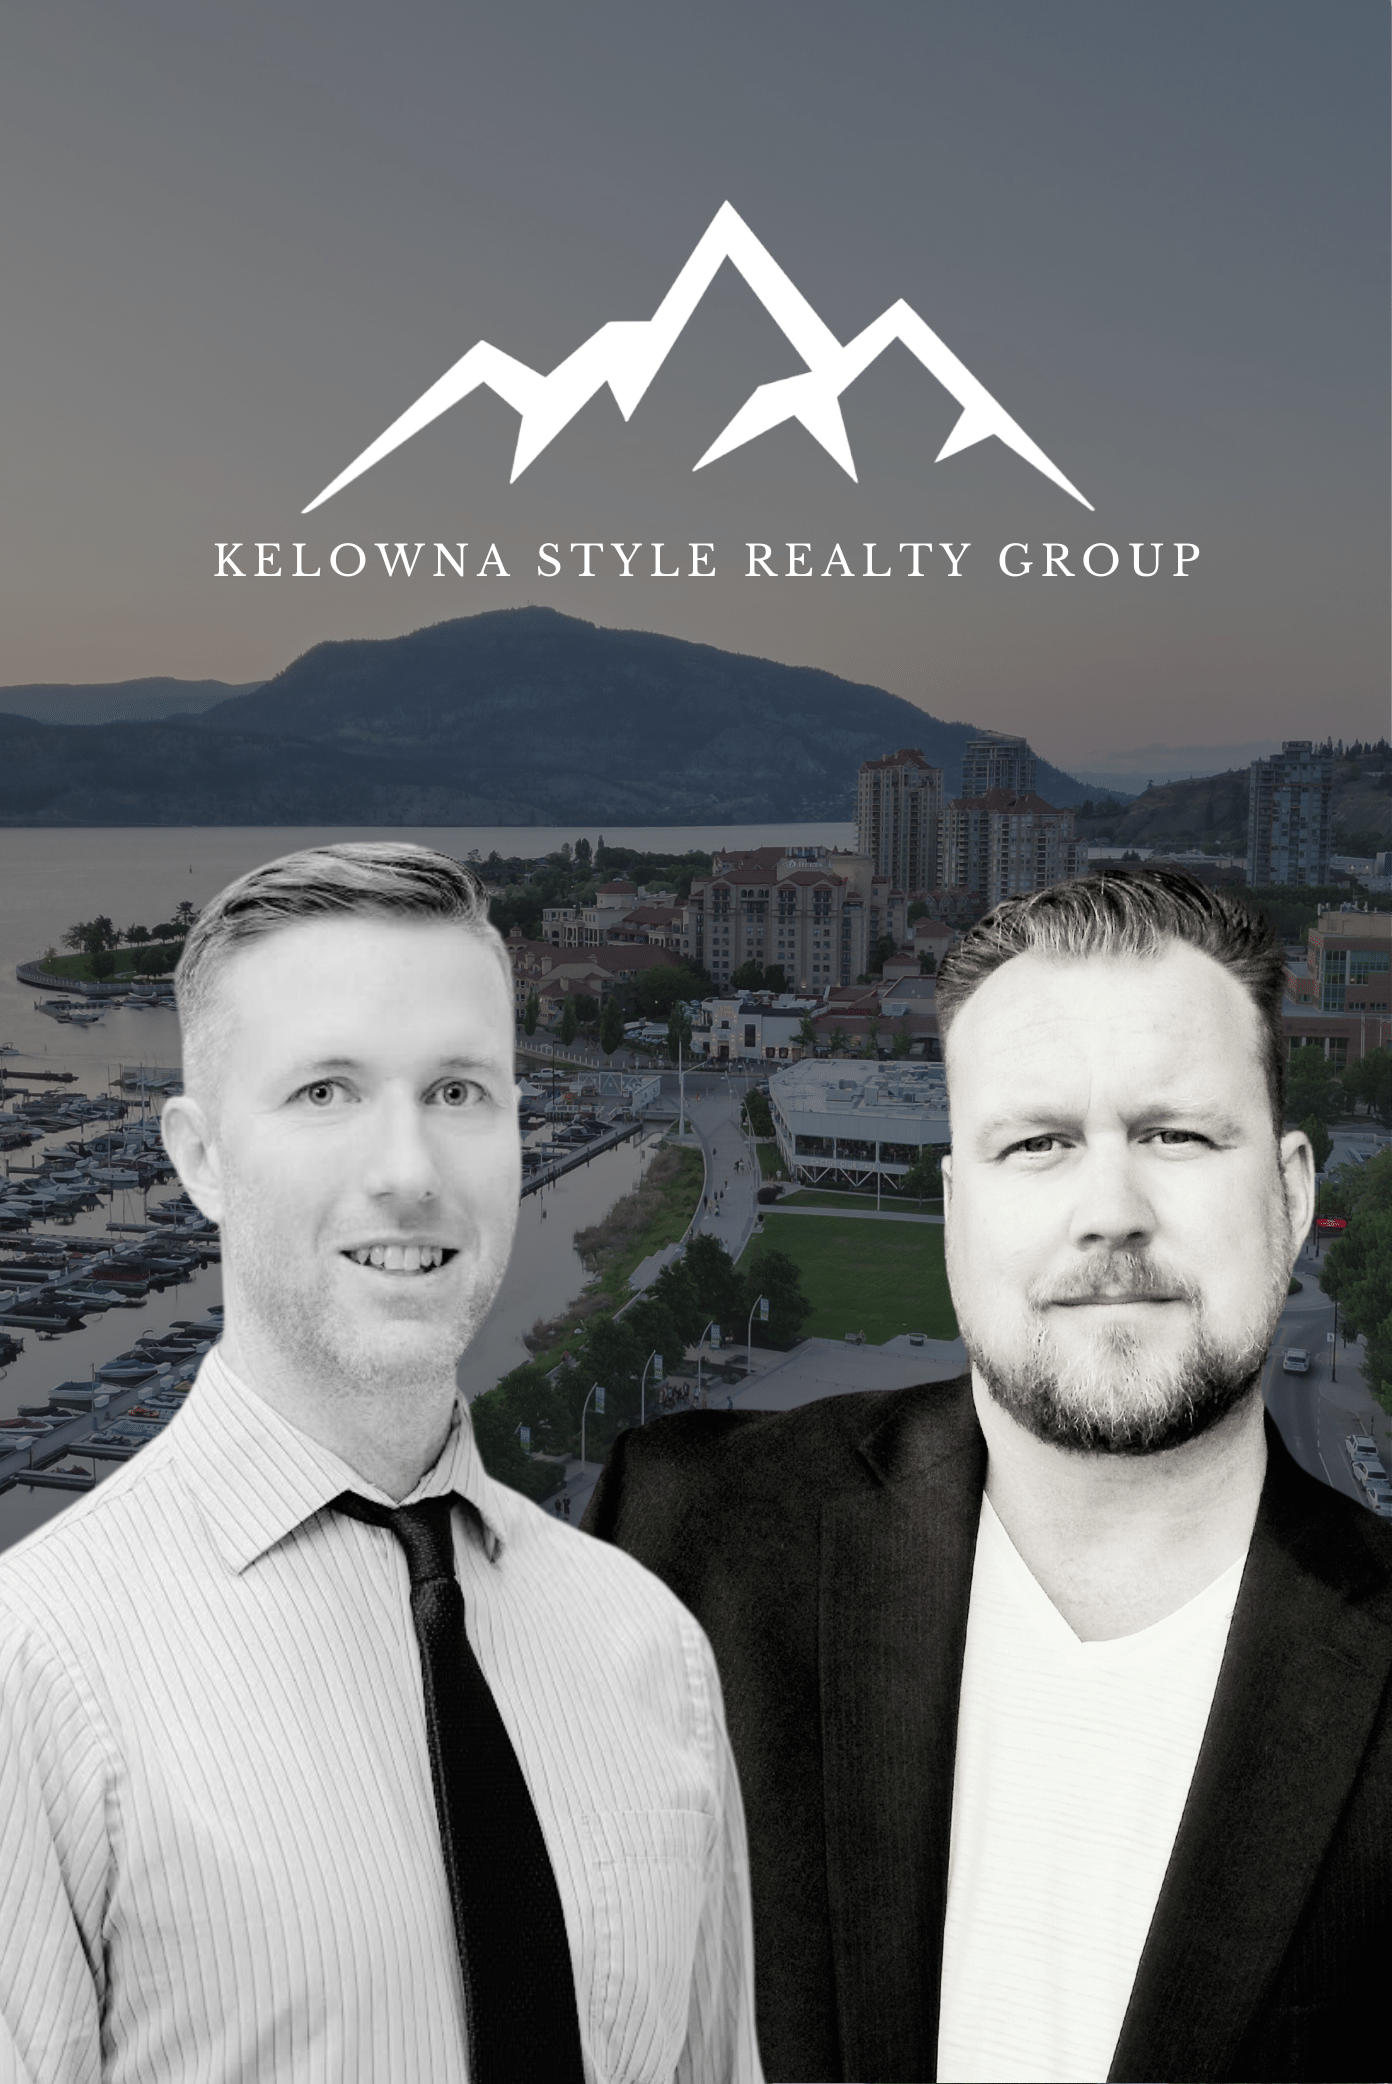 Kelowna Style Realty Group